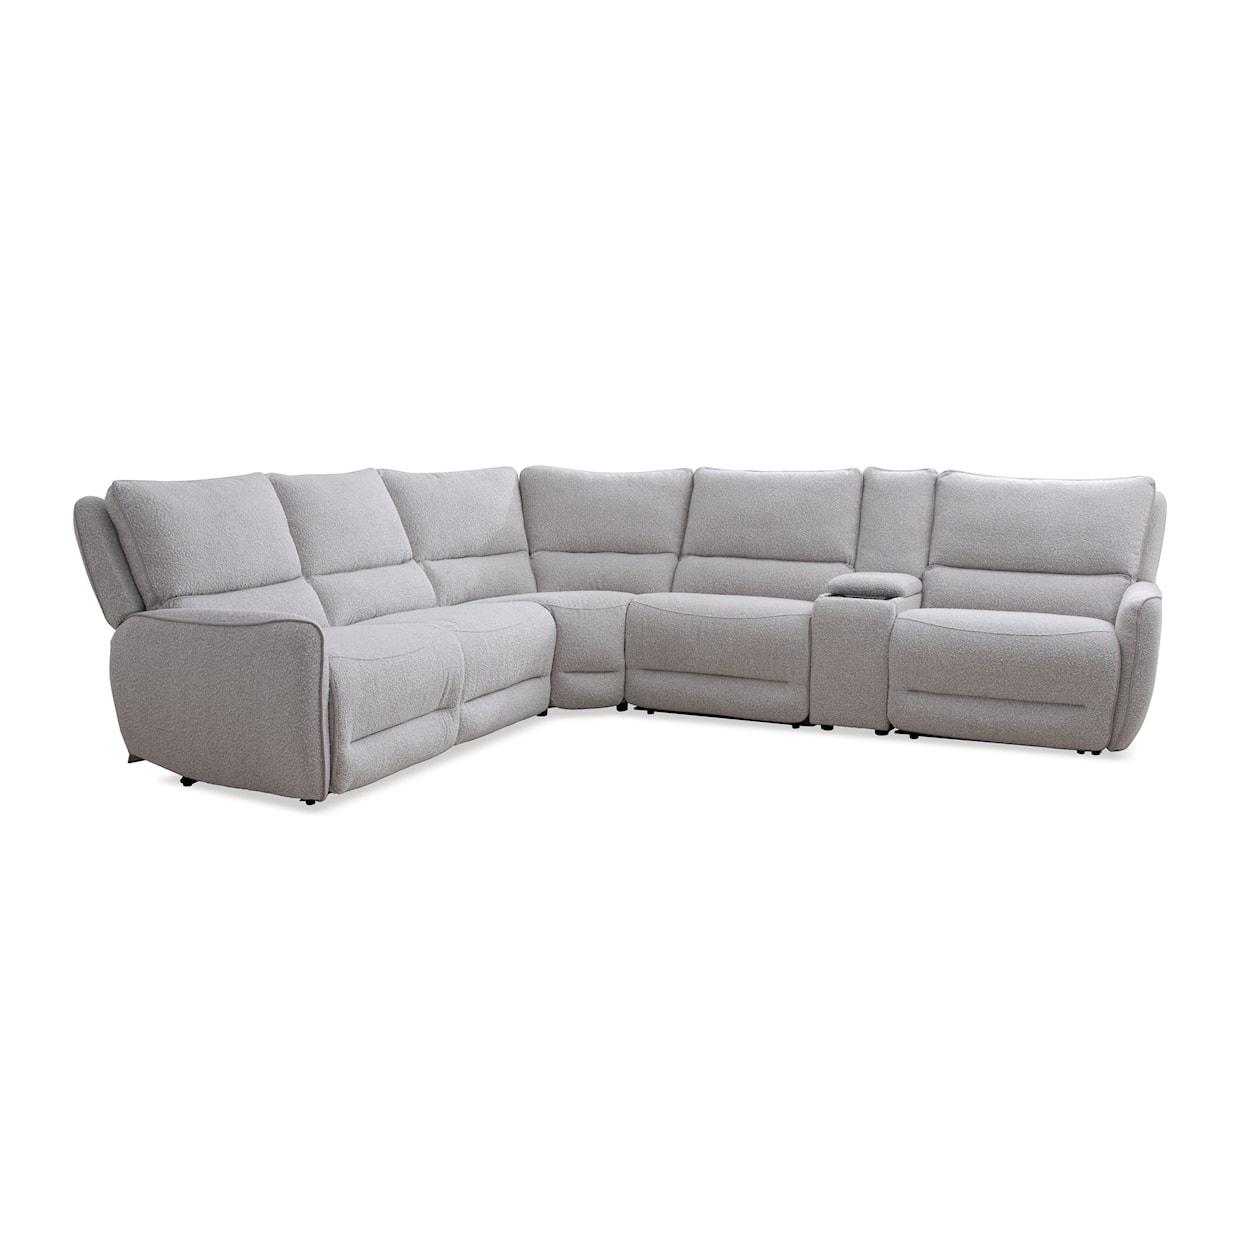 Parker Living Stellar - Bloke Cotton 6-Piece Sectional Sofa